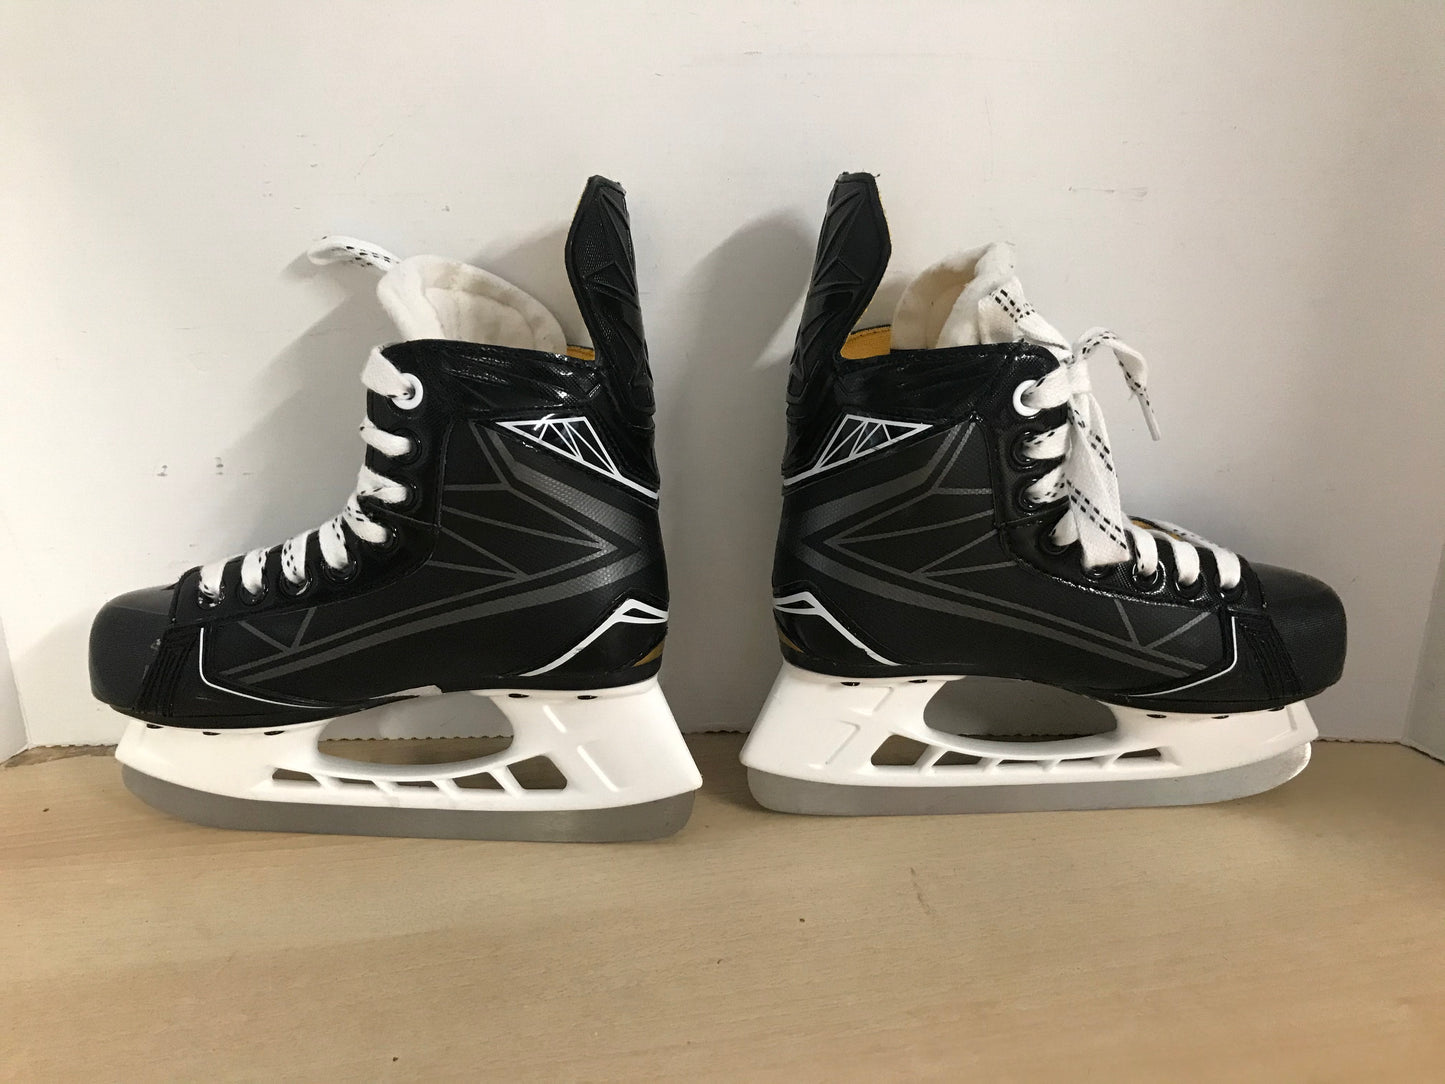 Hockey Skates Child Size 1 Shoe Size Bauer Bauer Supreme S160 New Demo Model